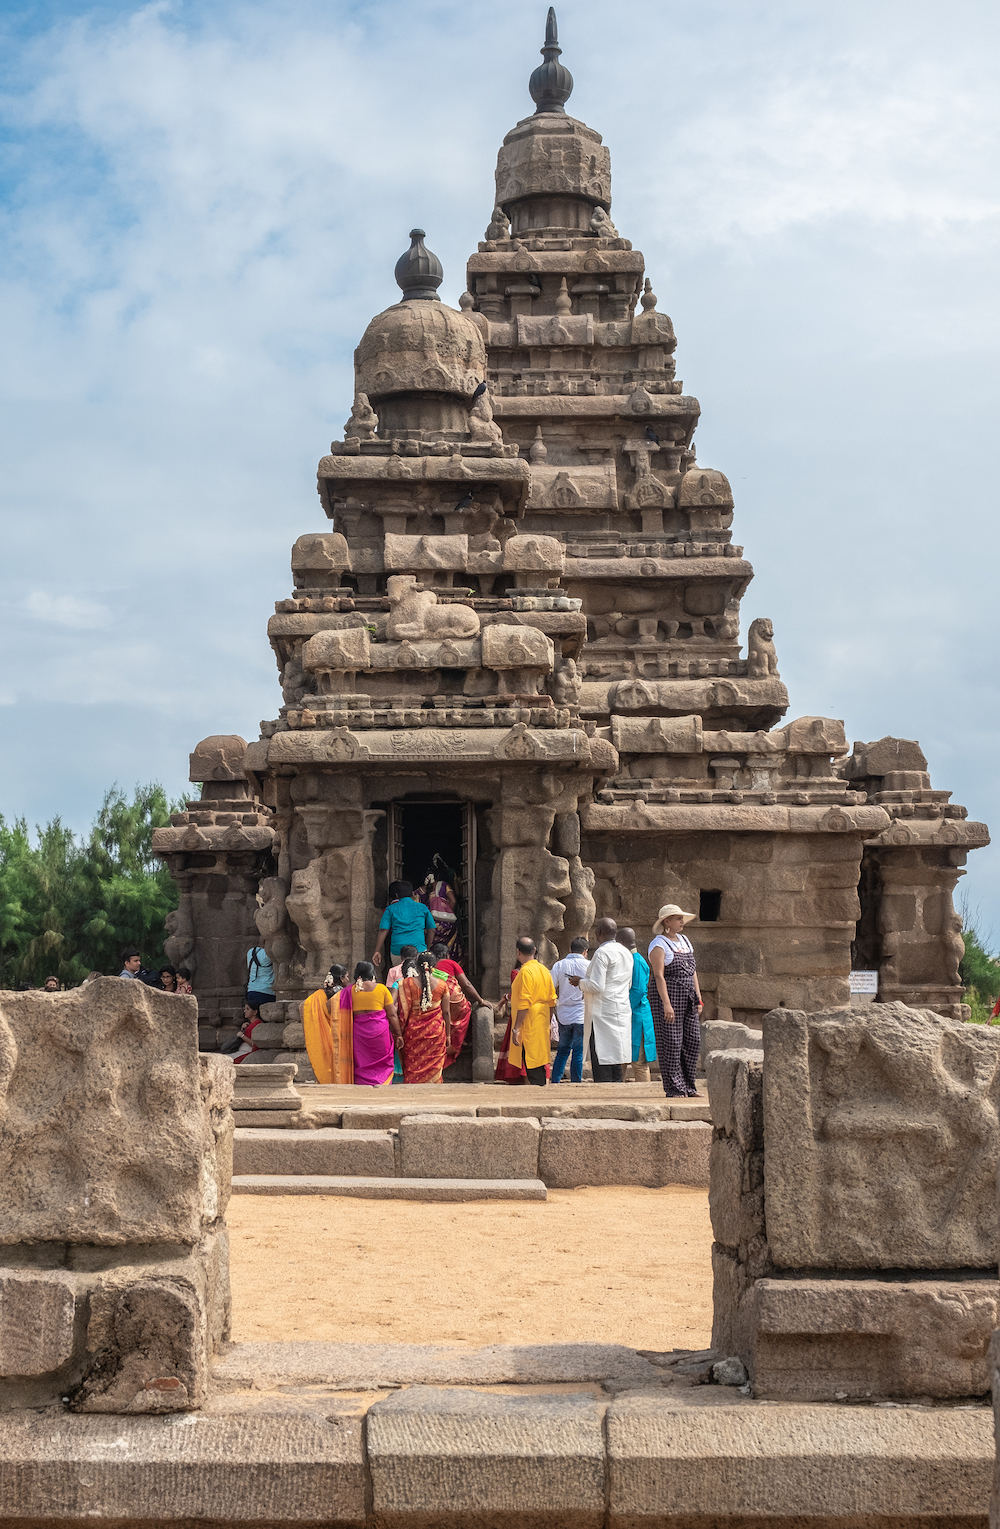 rondreis zuid india Mahabalipuram shore temple